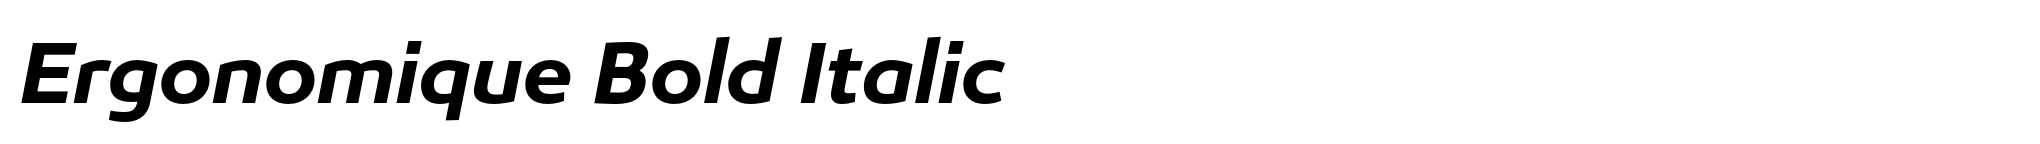 Ergonomique Bold Italic image